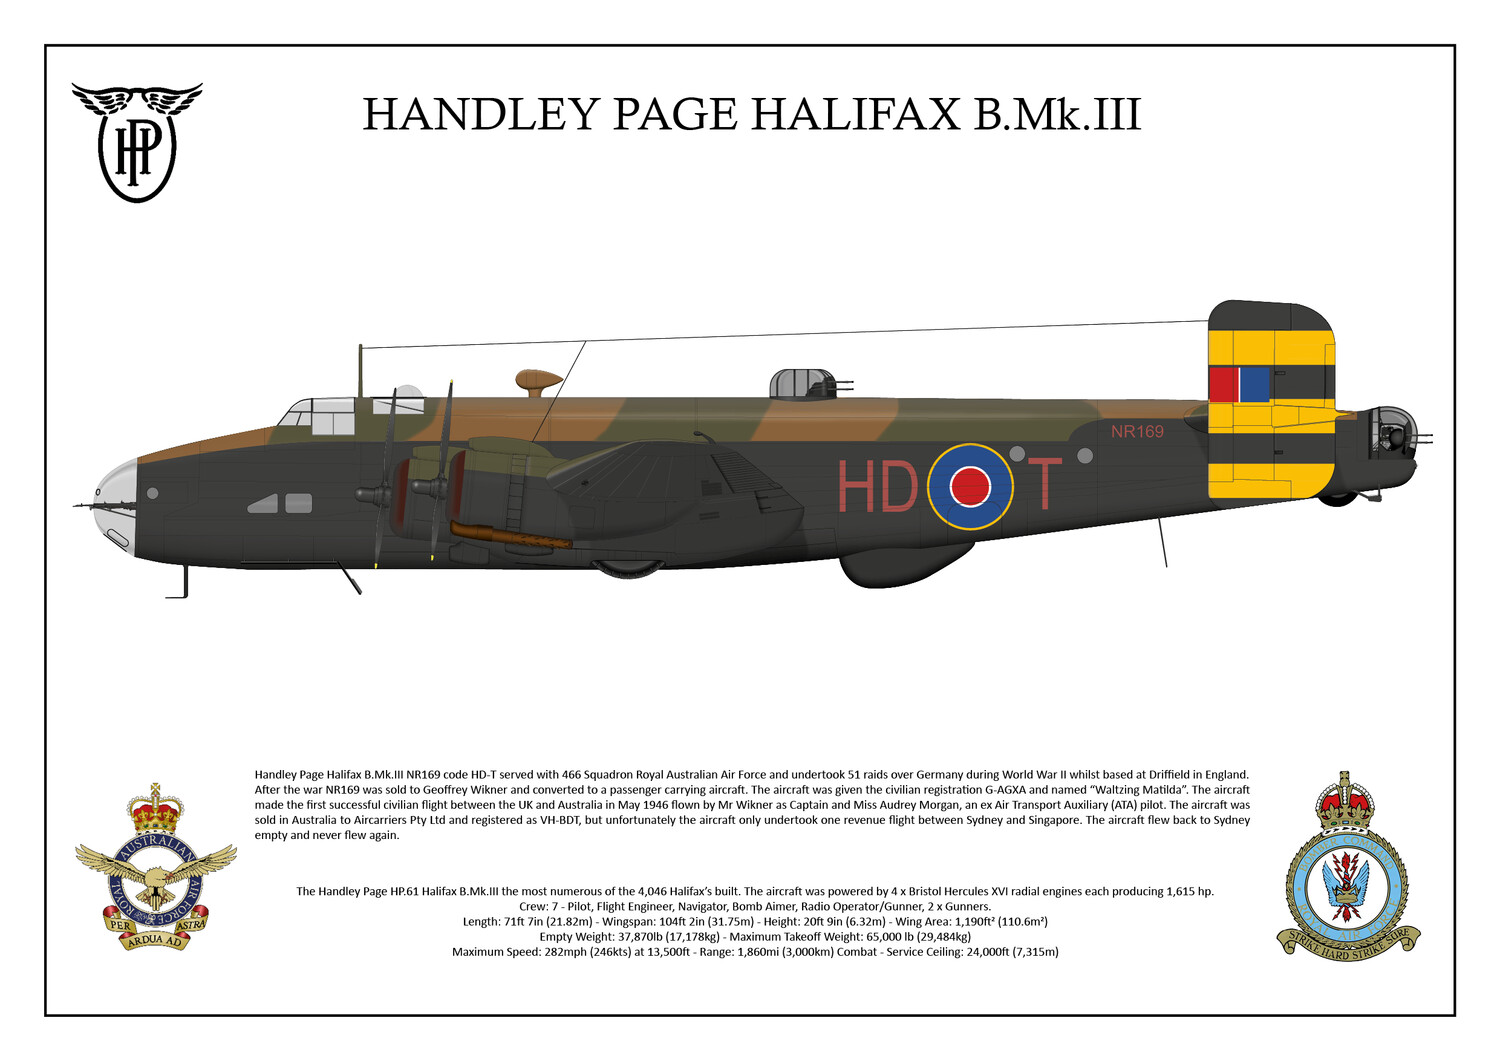 Handley Page Halifax NR169